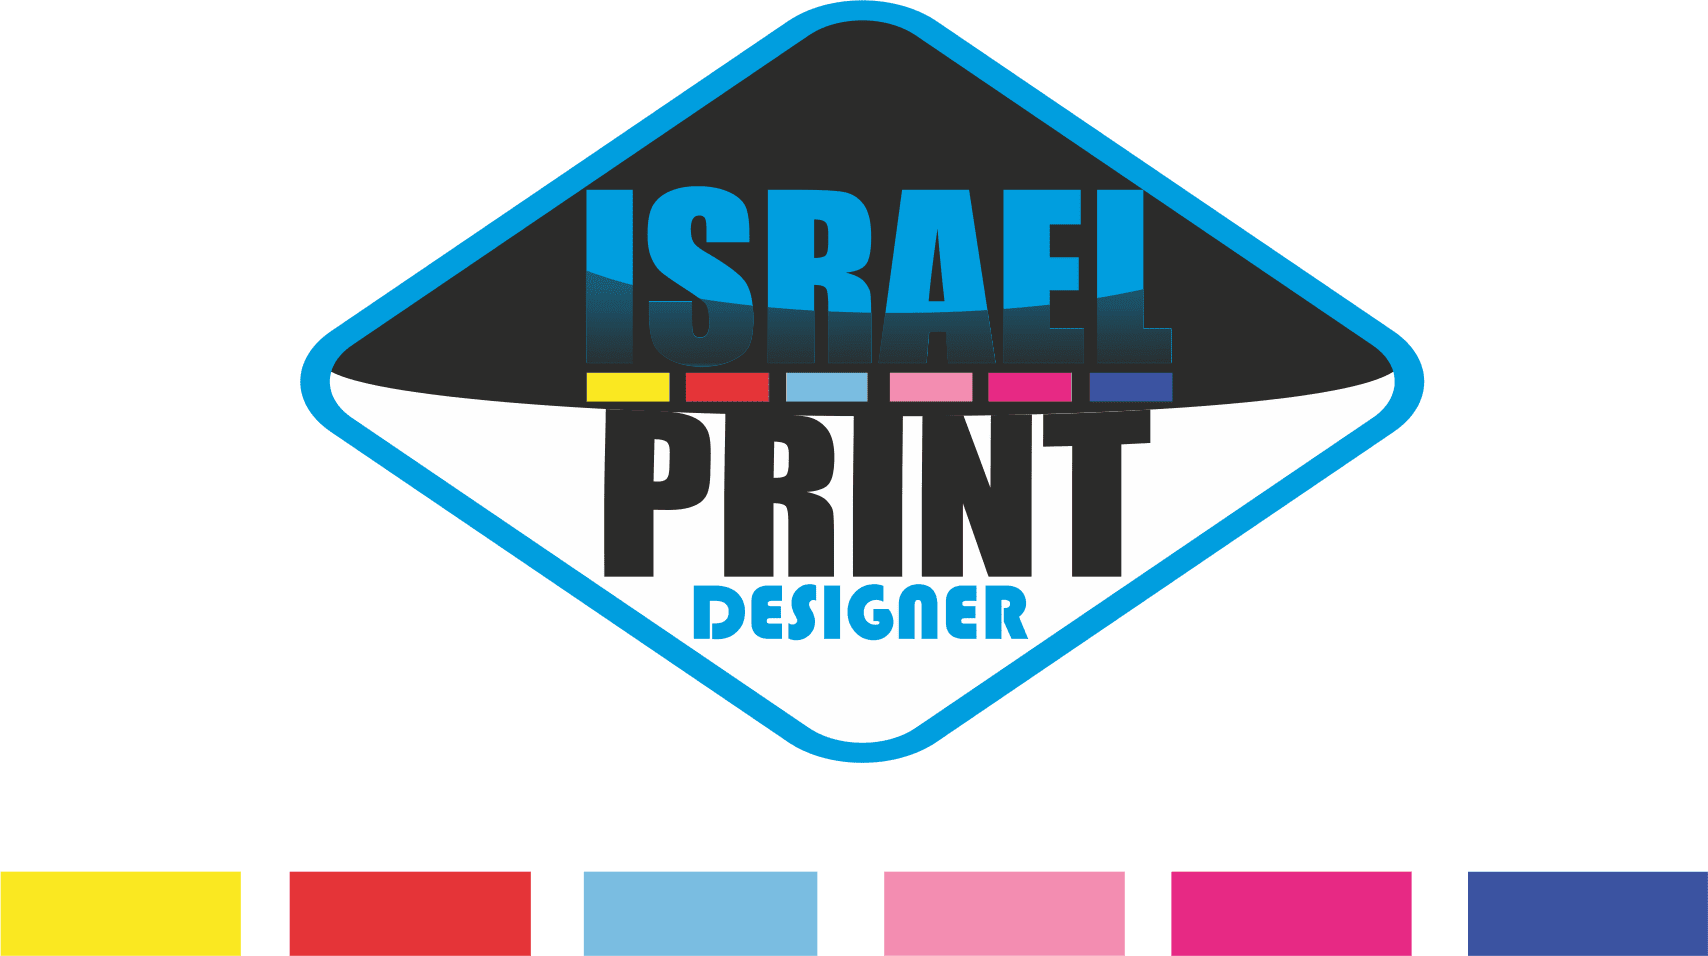 Israel Print & Designer